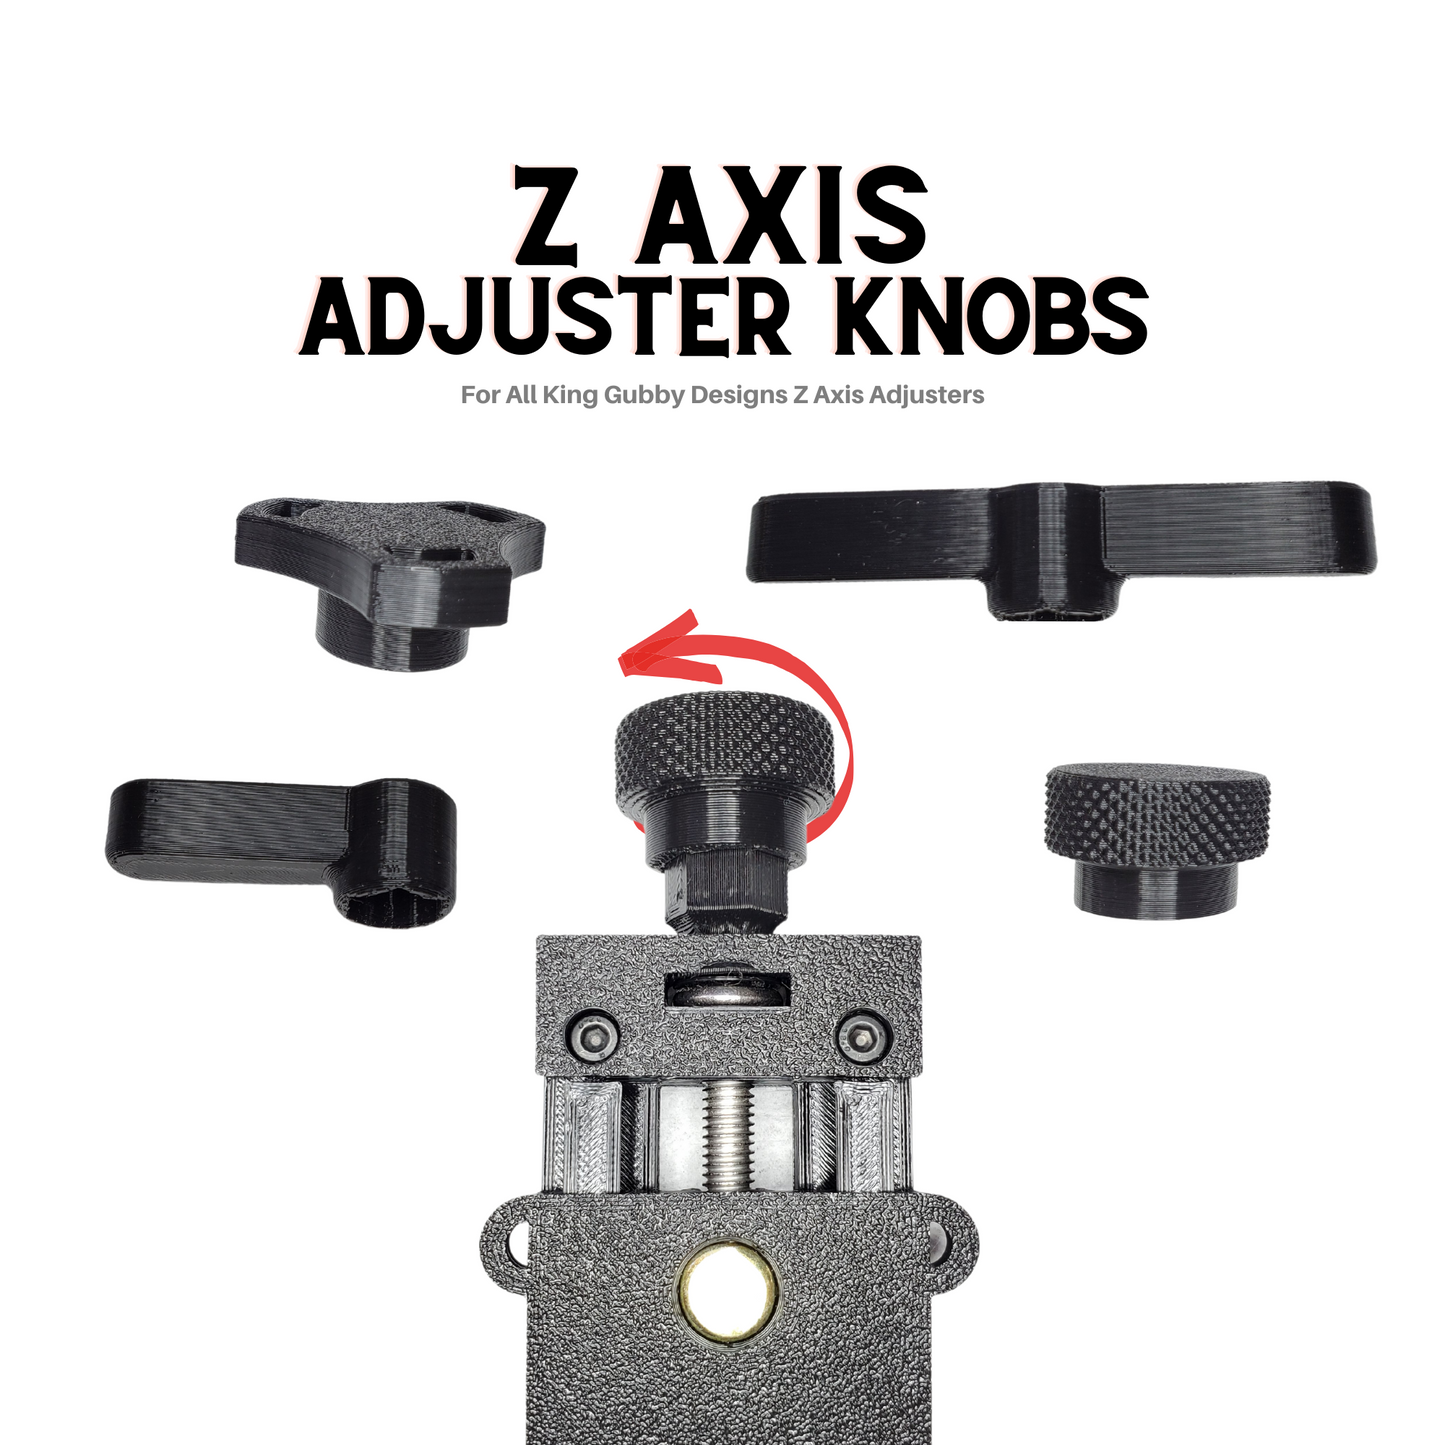 Sculpfun S10 Z Axis Adjuster – King Gubby